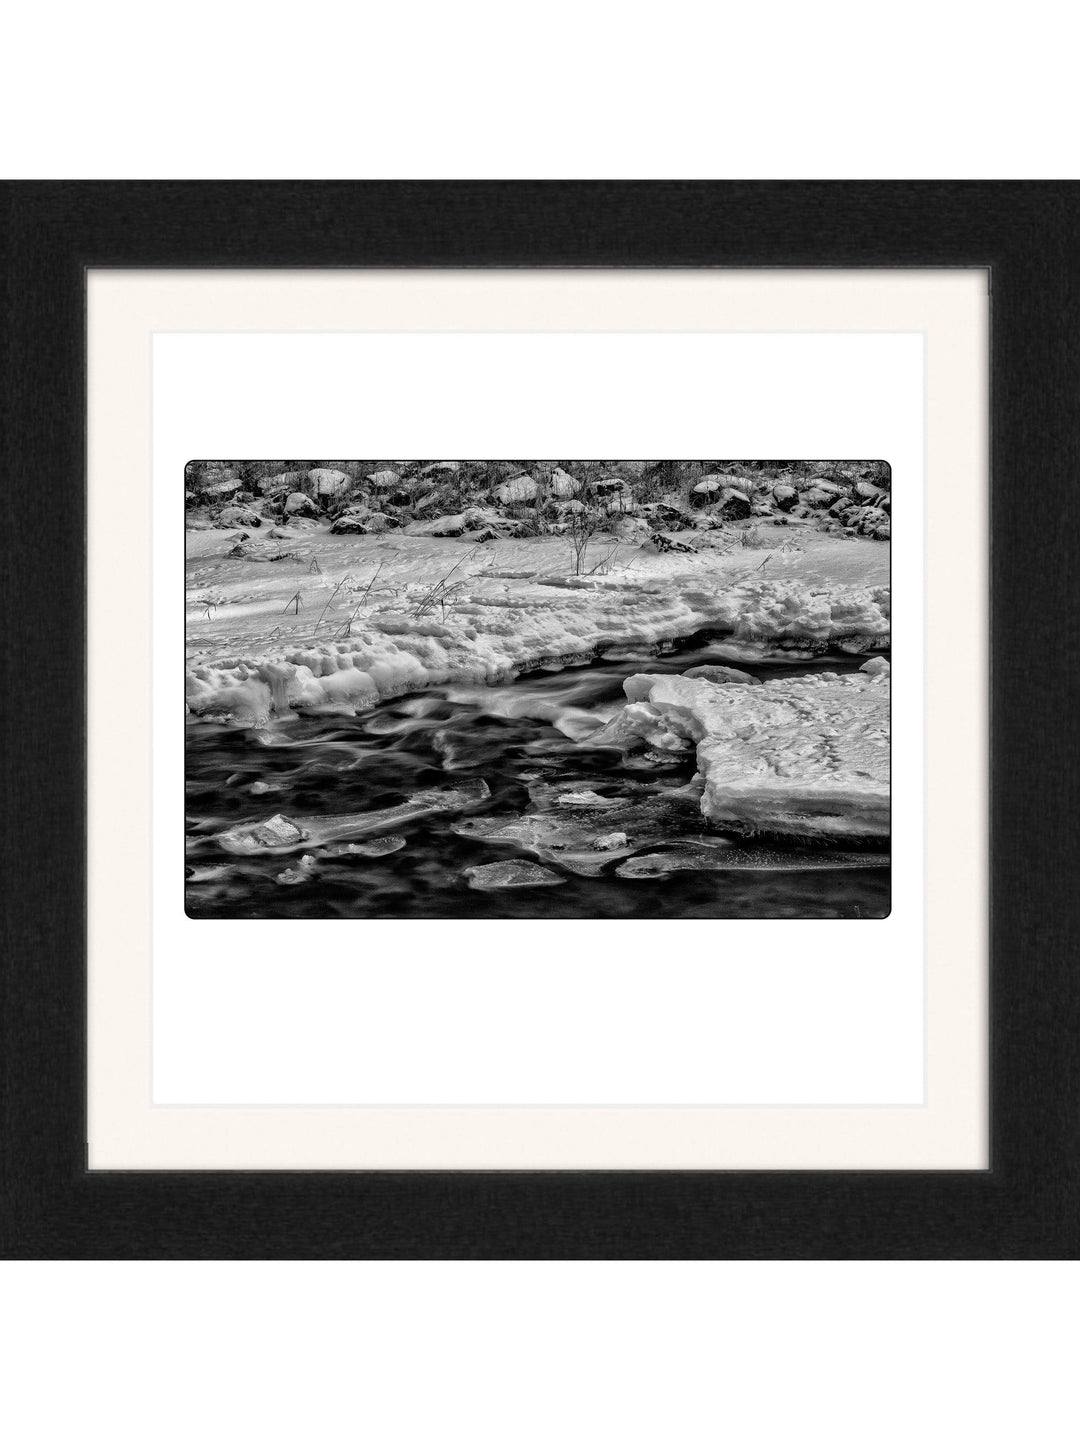 Water and Ice Square Edition - Richard Stefani - Stefani Fine Art